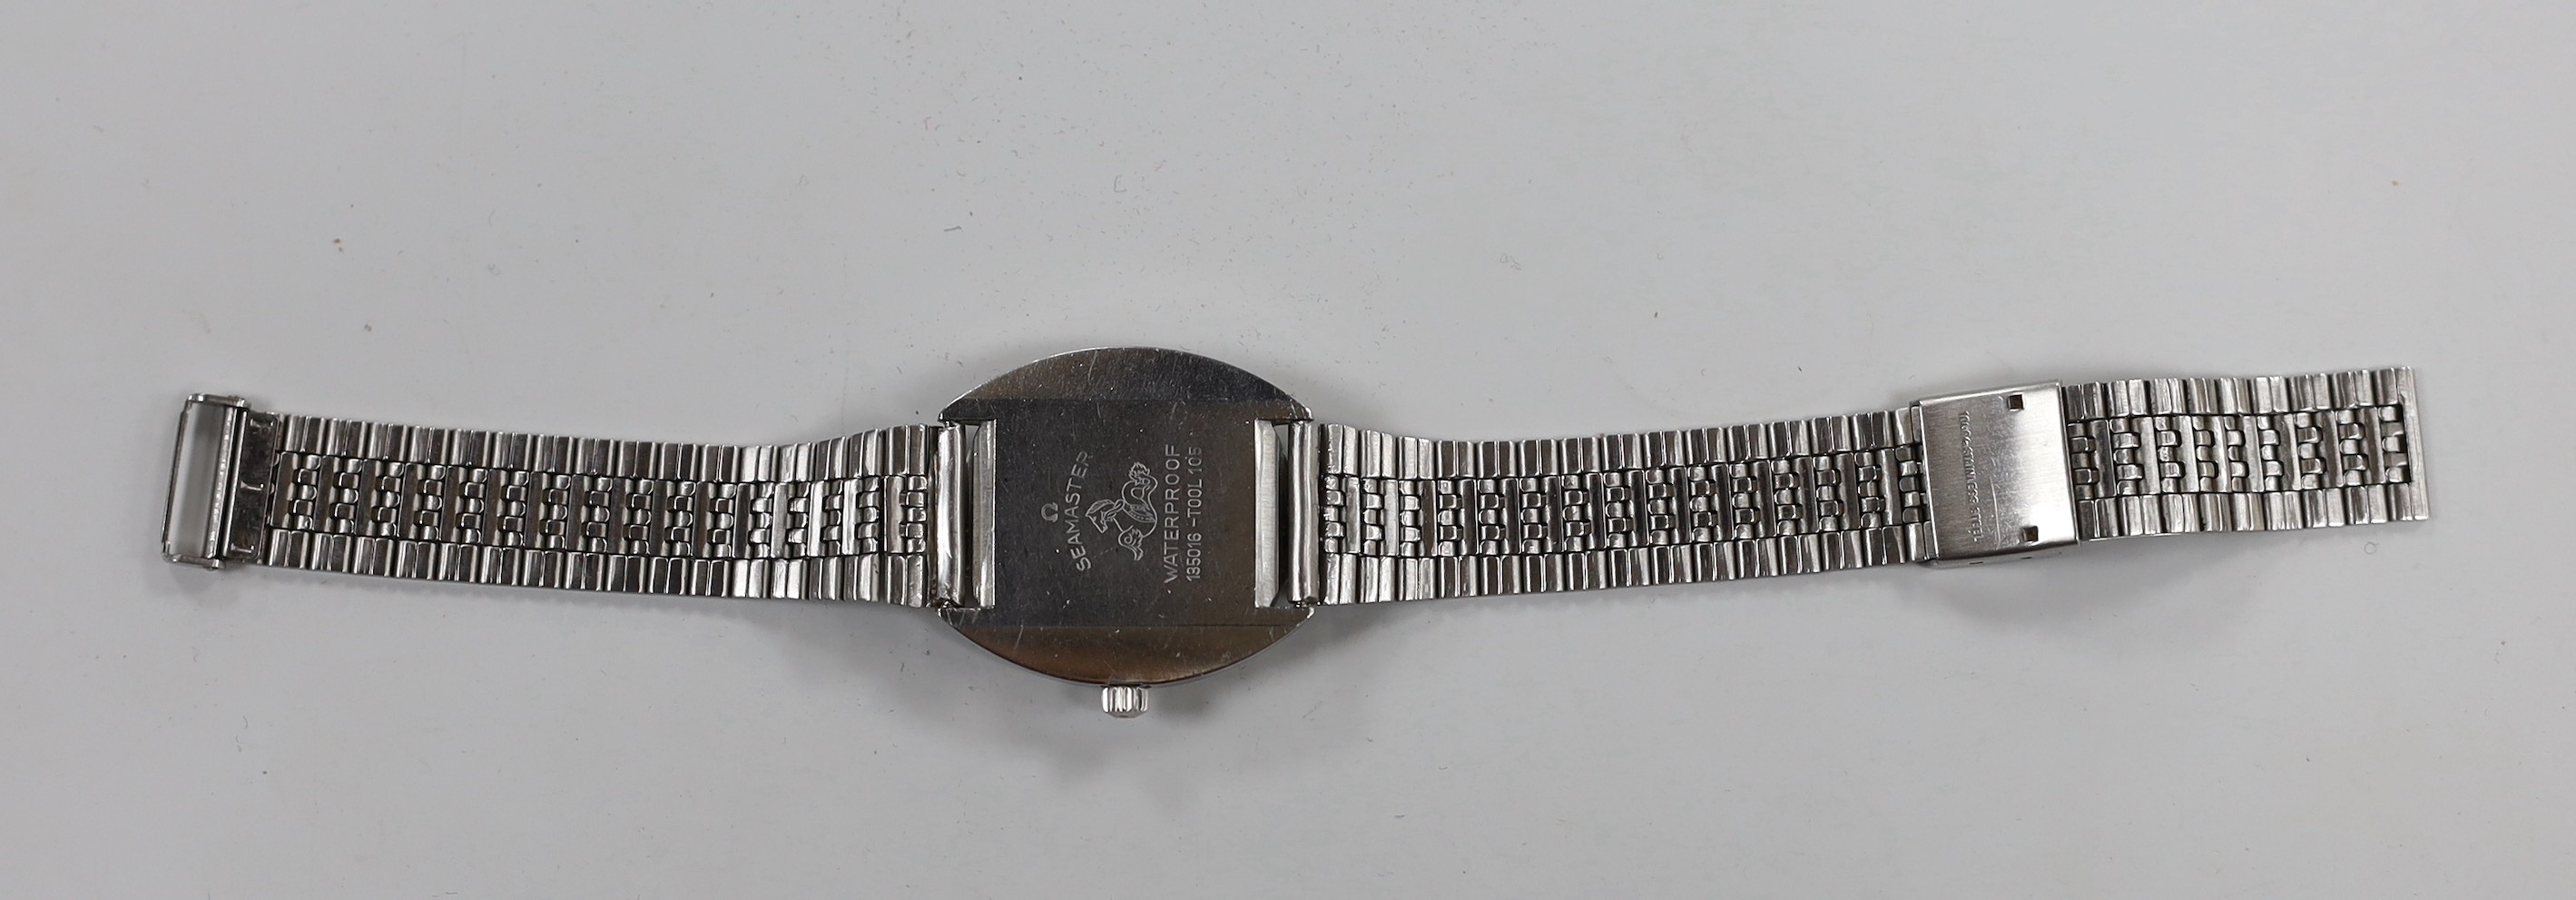 A gentleman's 1970's? stainless steel Omega Seamaster Cosmic manual wind wrist watch, on associated bracelet, case diameter 34mm.